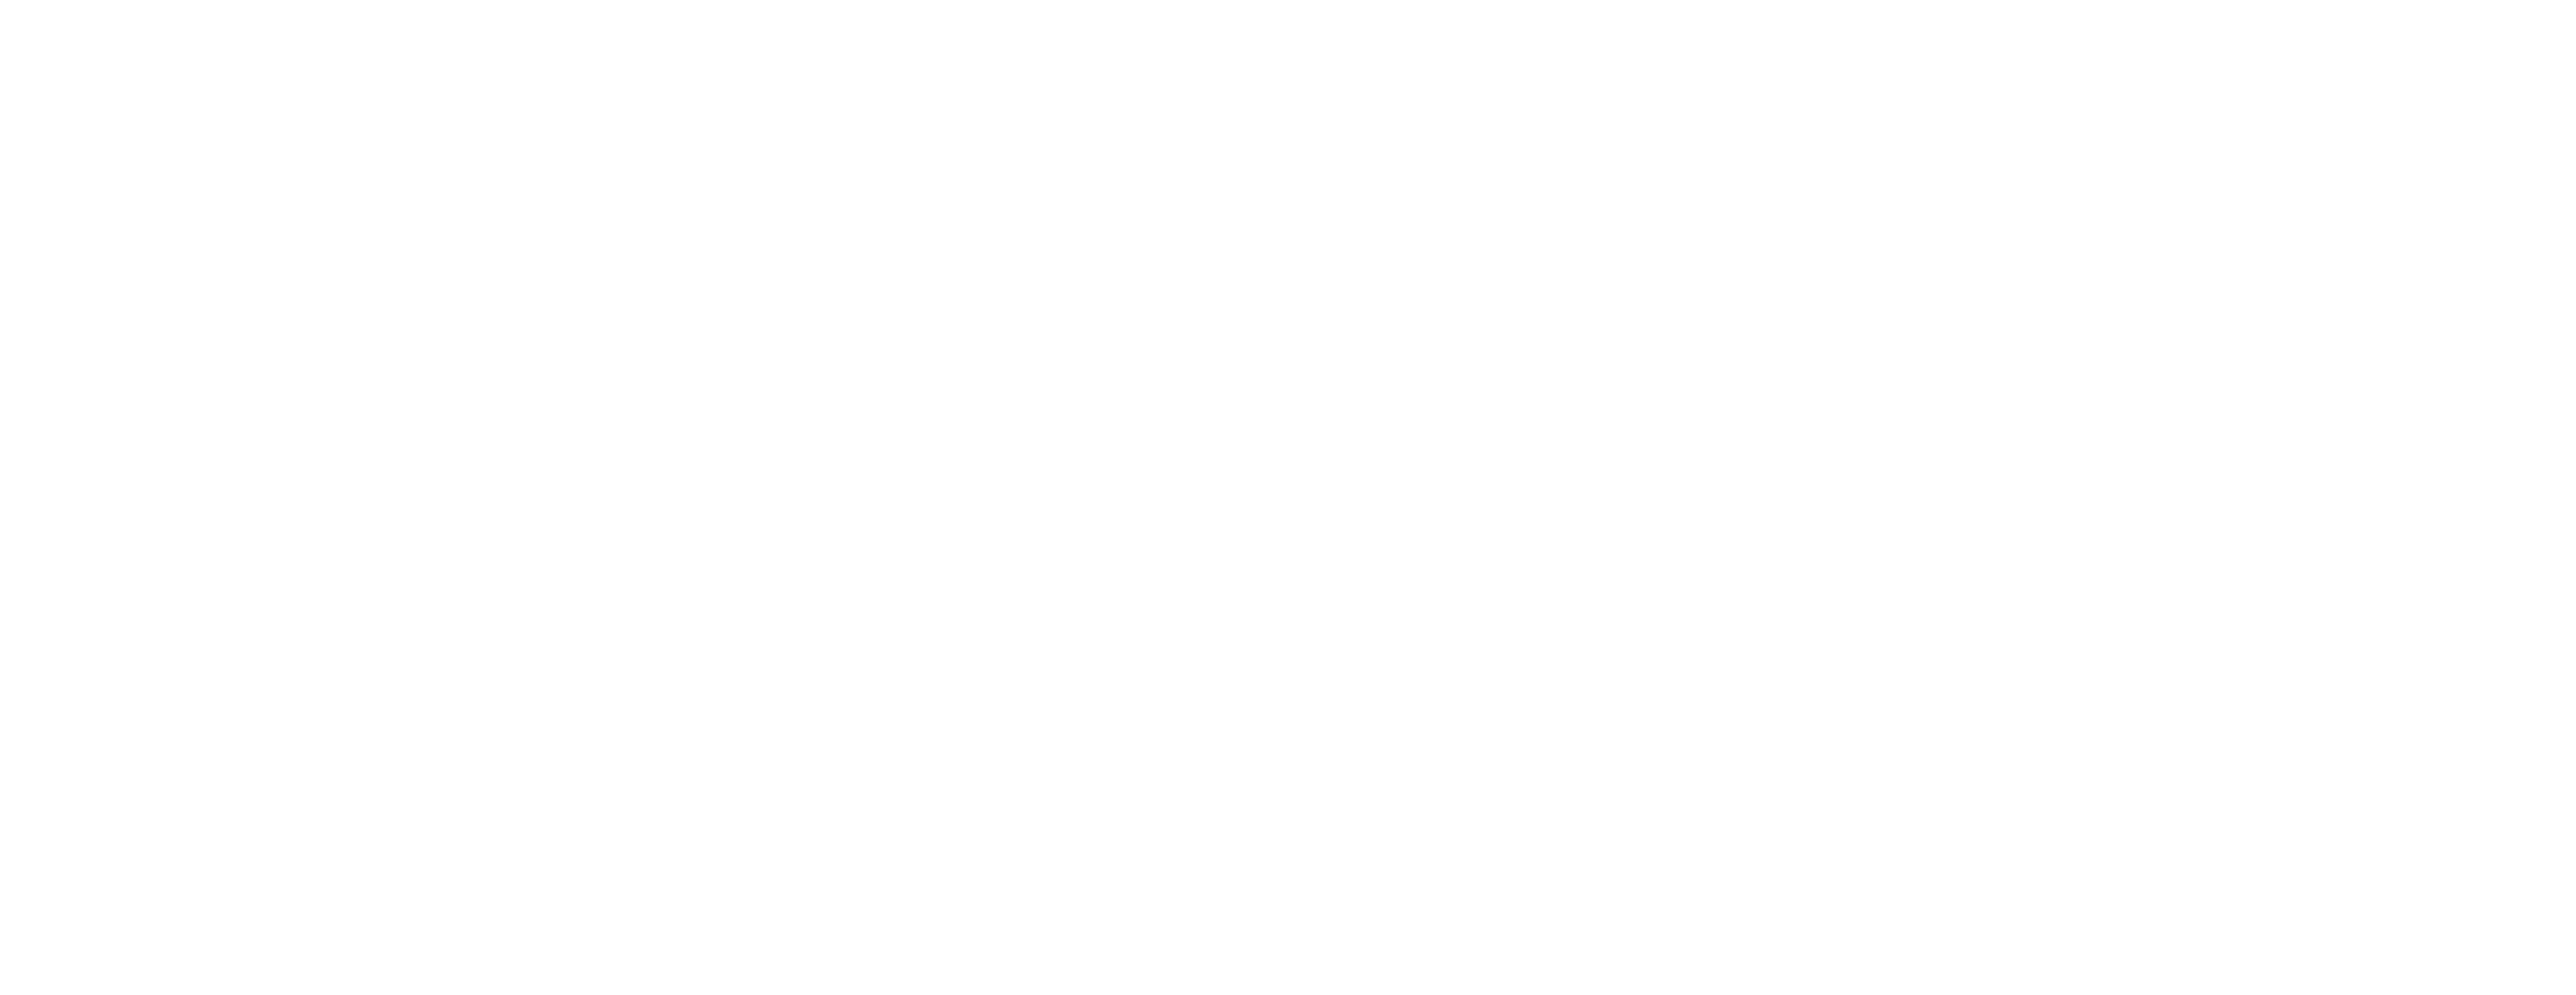 Cosmic green logo white